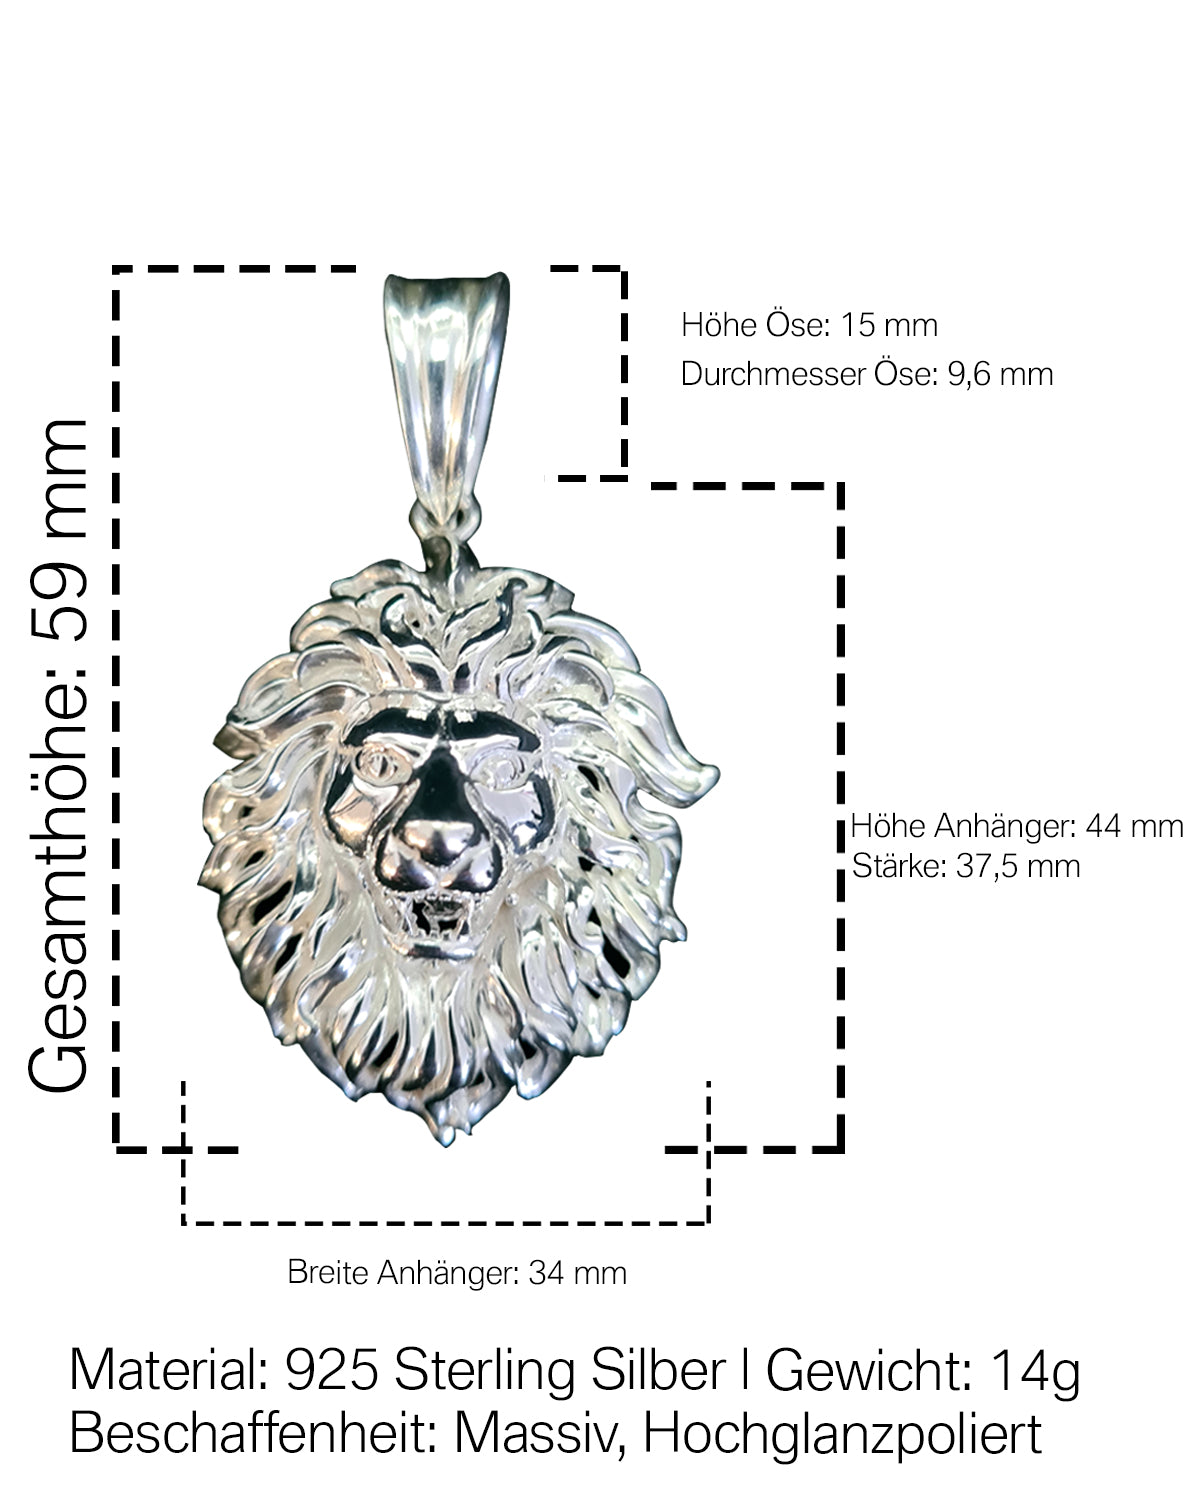 Großer Löwen Anhänger aus 925 Sterling Silber – KINGSSILVER